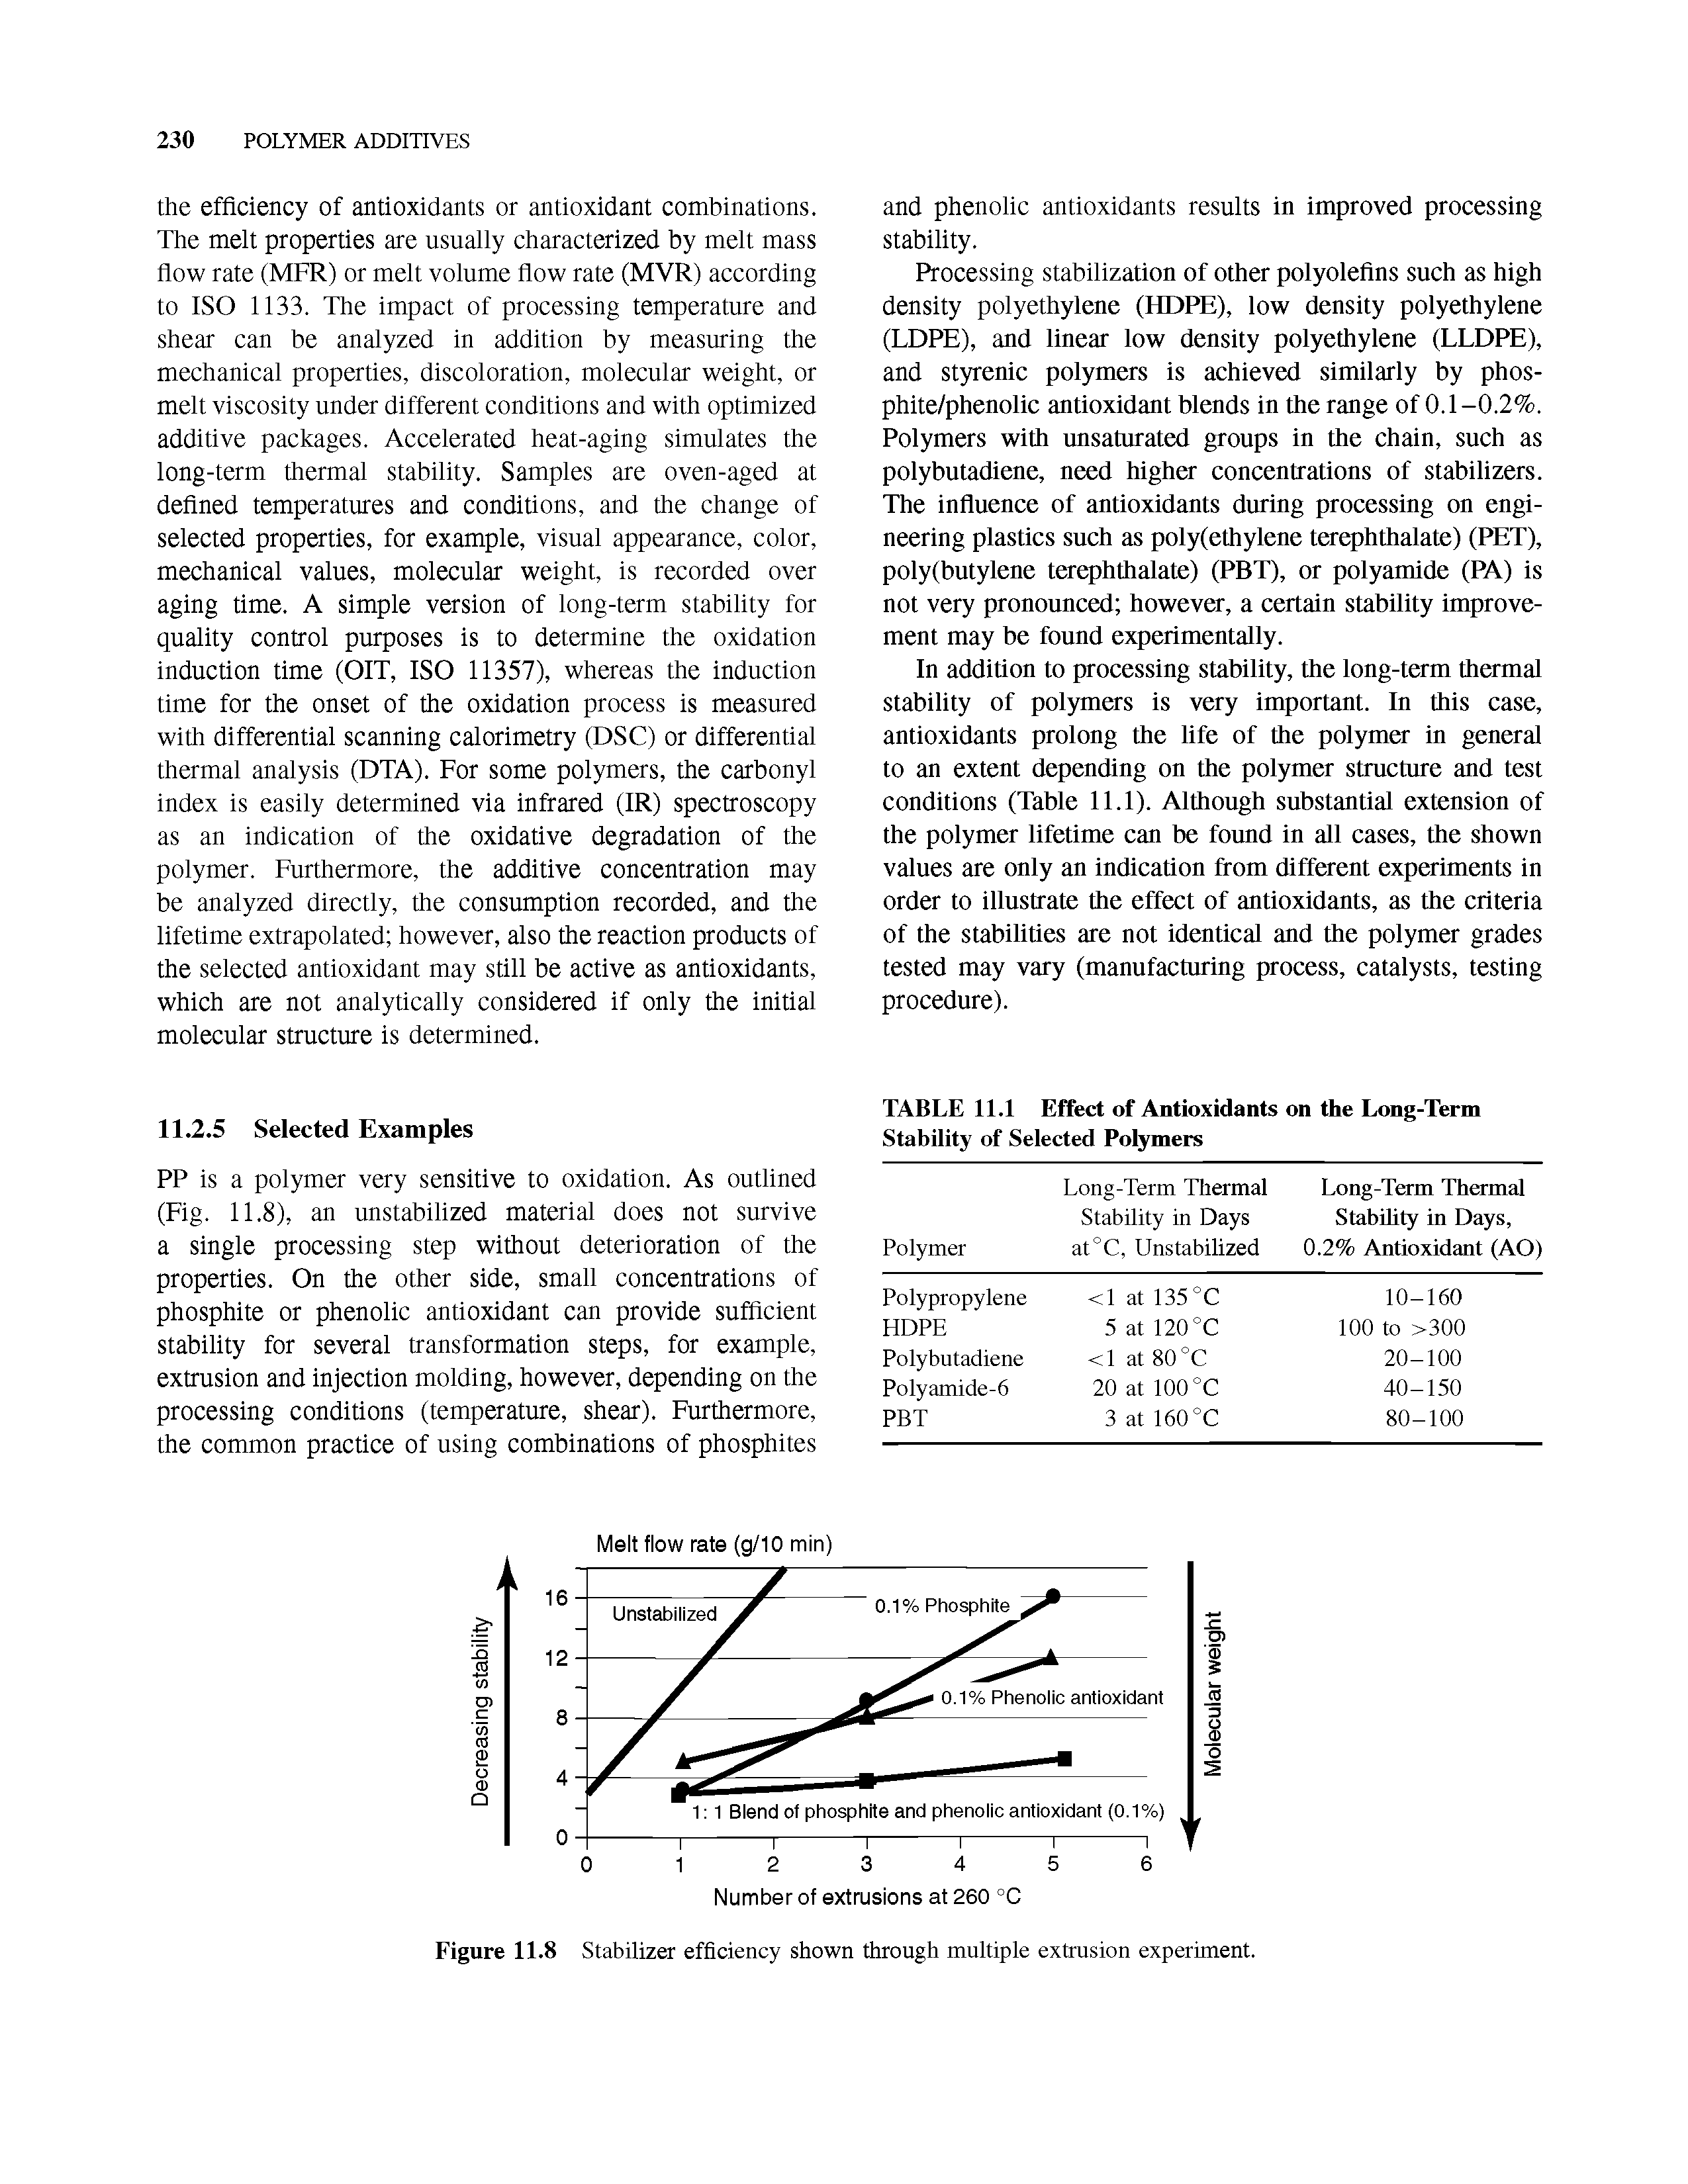 Figure 11.8 Stabilizer efficiency shown through multiple extrusion experiment.